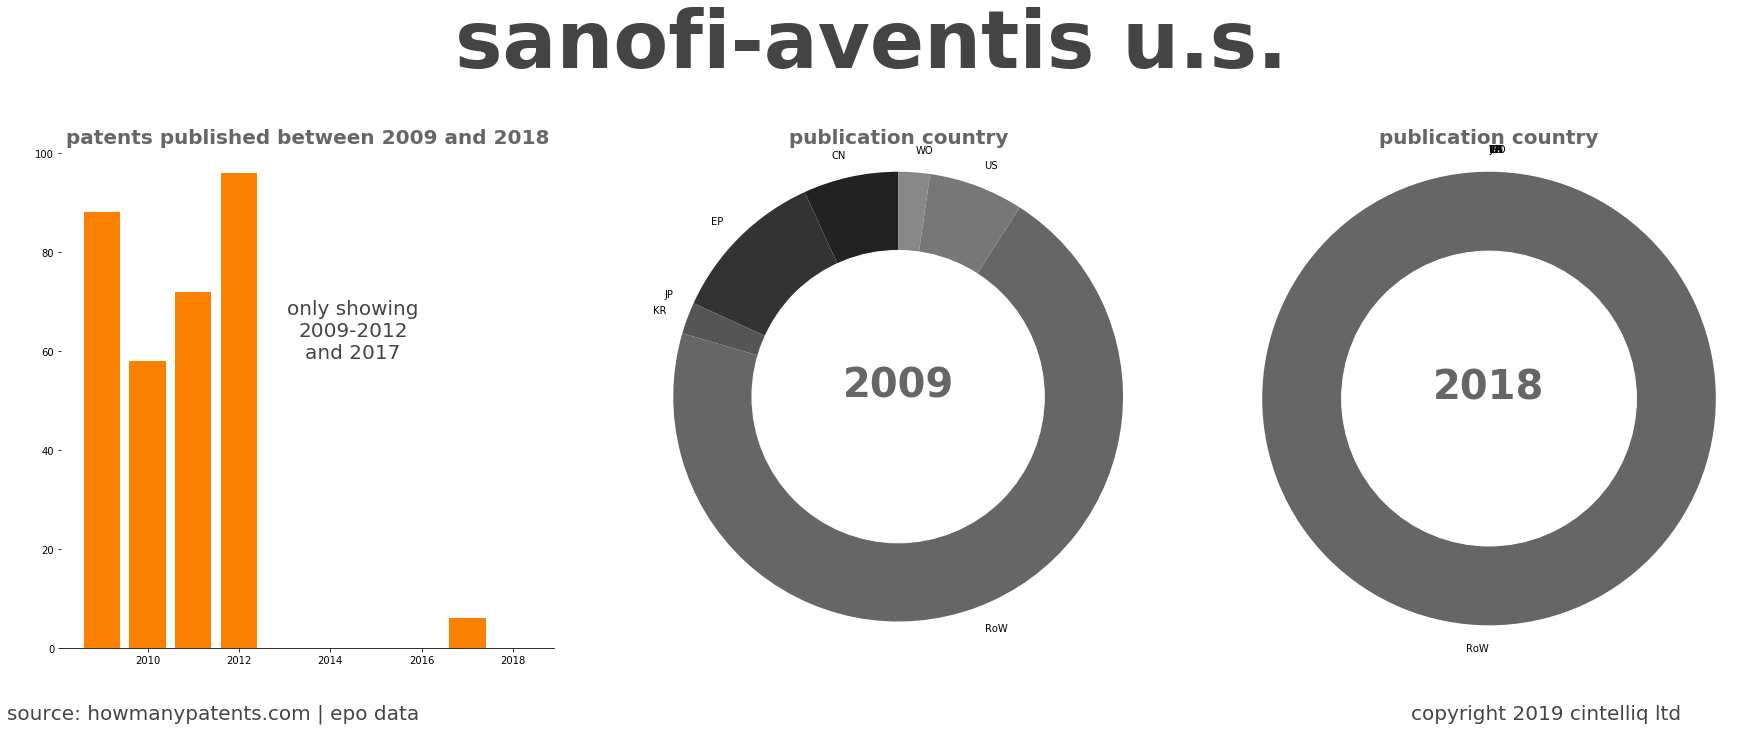 summary of patents for Sanofi-Aventis U.S.